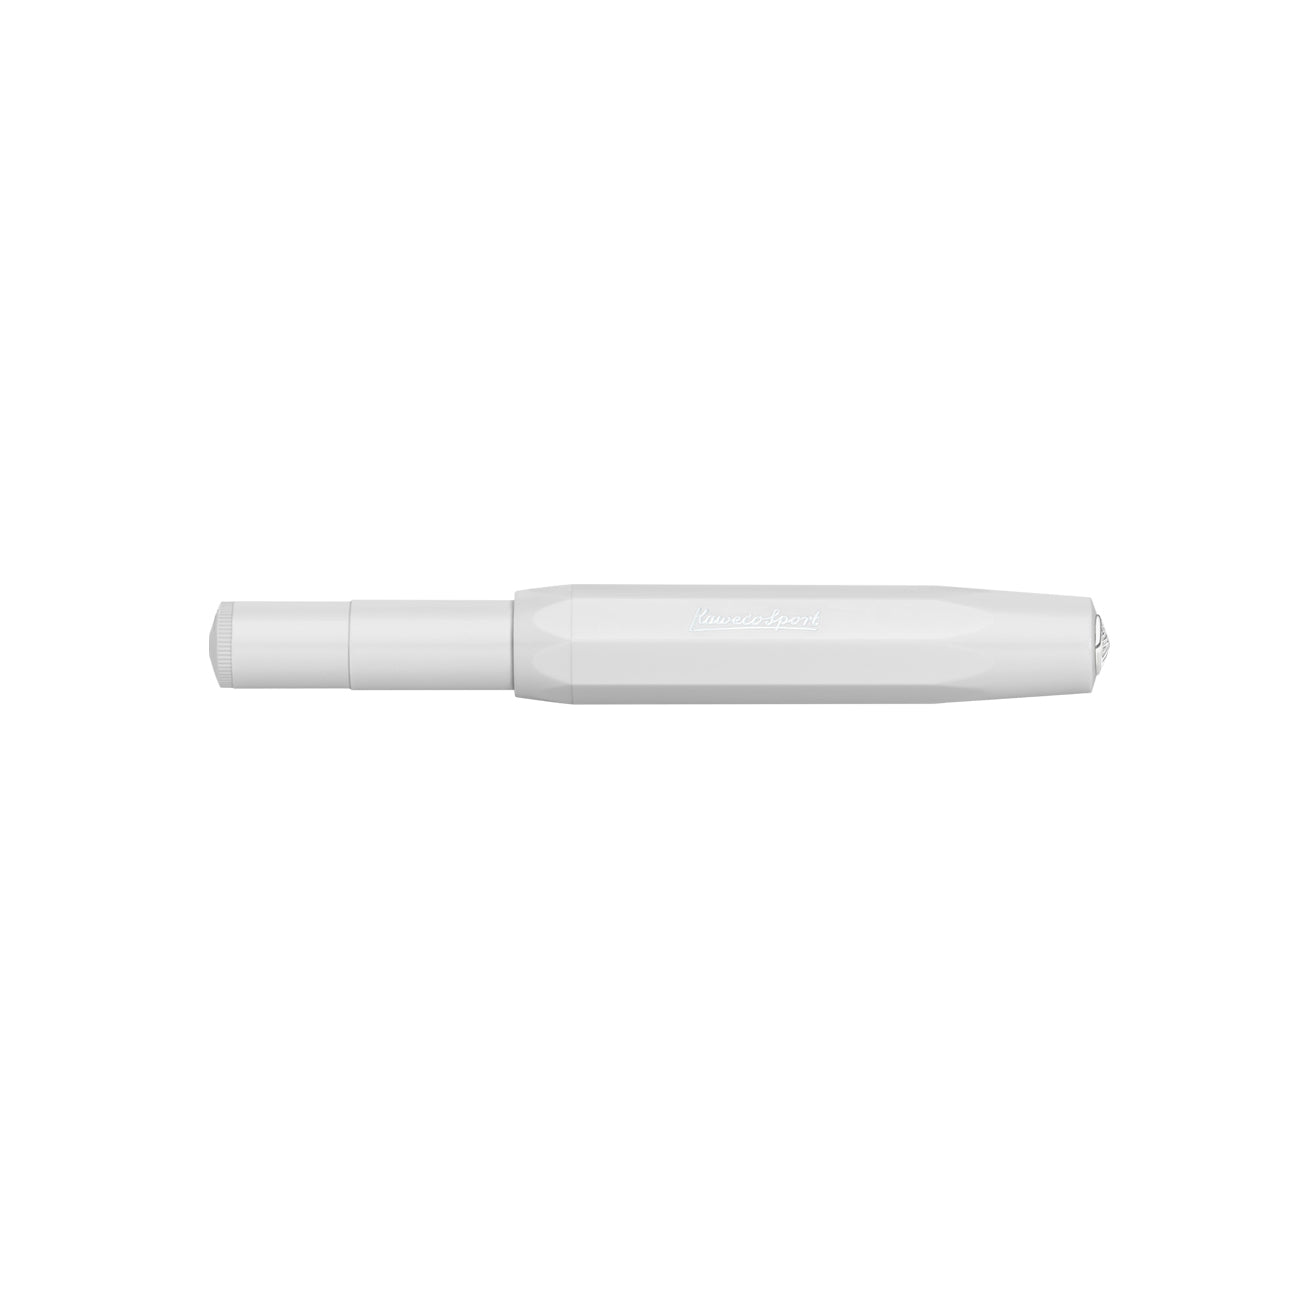 Kaweco Skyline Rollerball Pen in White